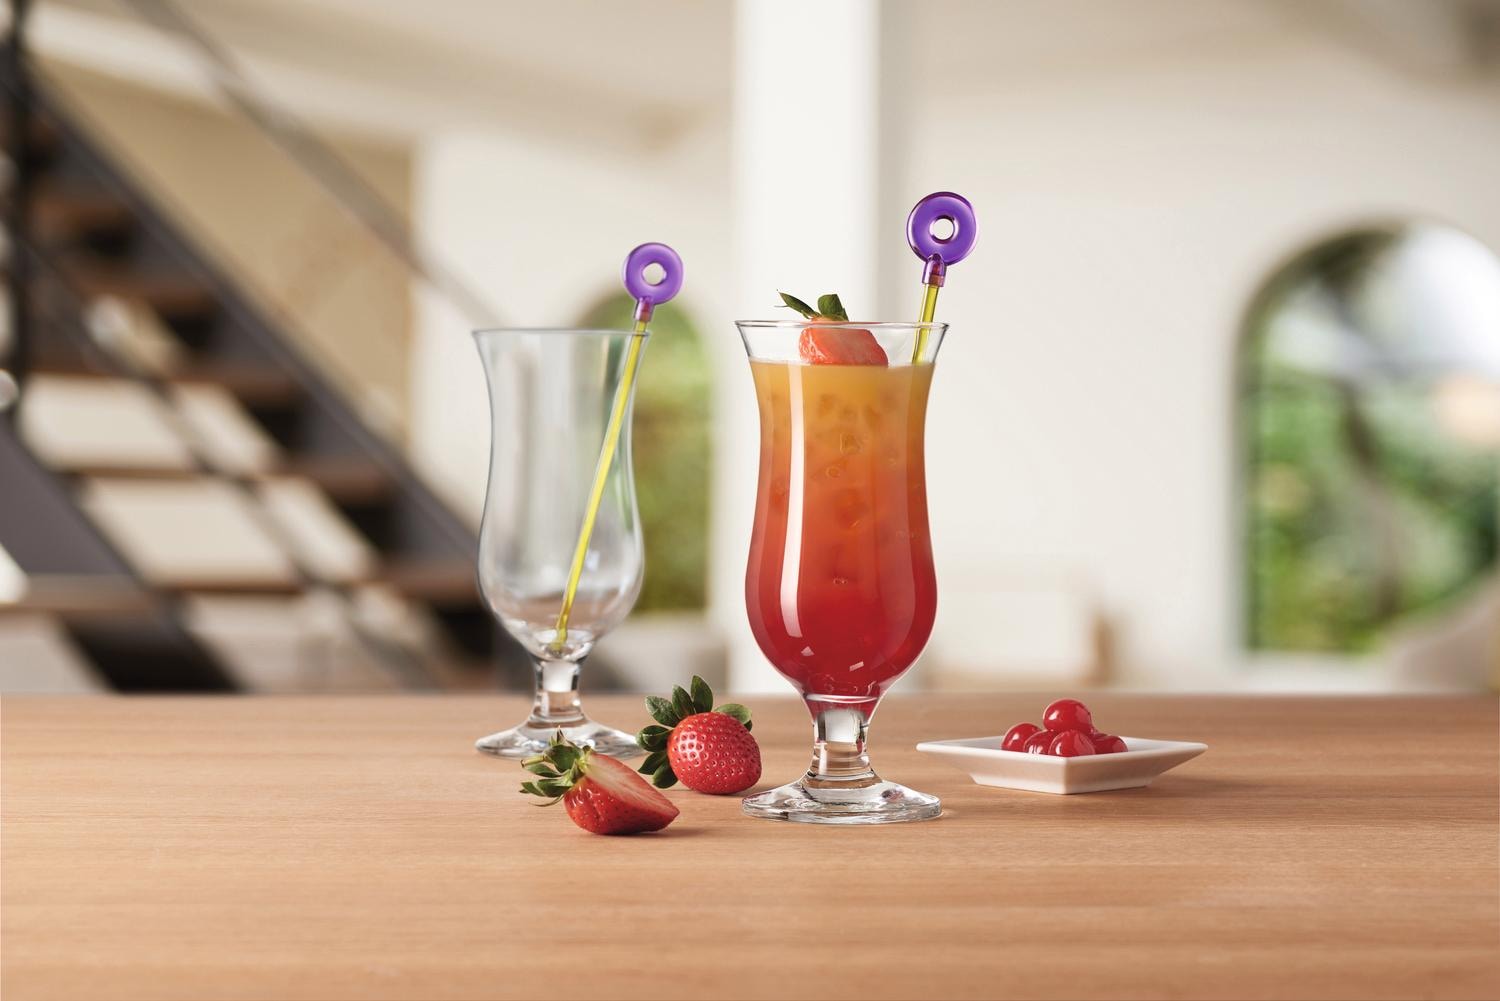 LEONARDO Cocktailglas »Hurricane«, (Set, 12 tlg., 6 Gläser, 6 Rührer), (6 Gläser, 6 Rührer), 330 ml